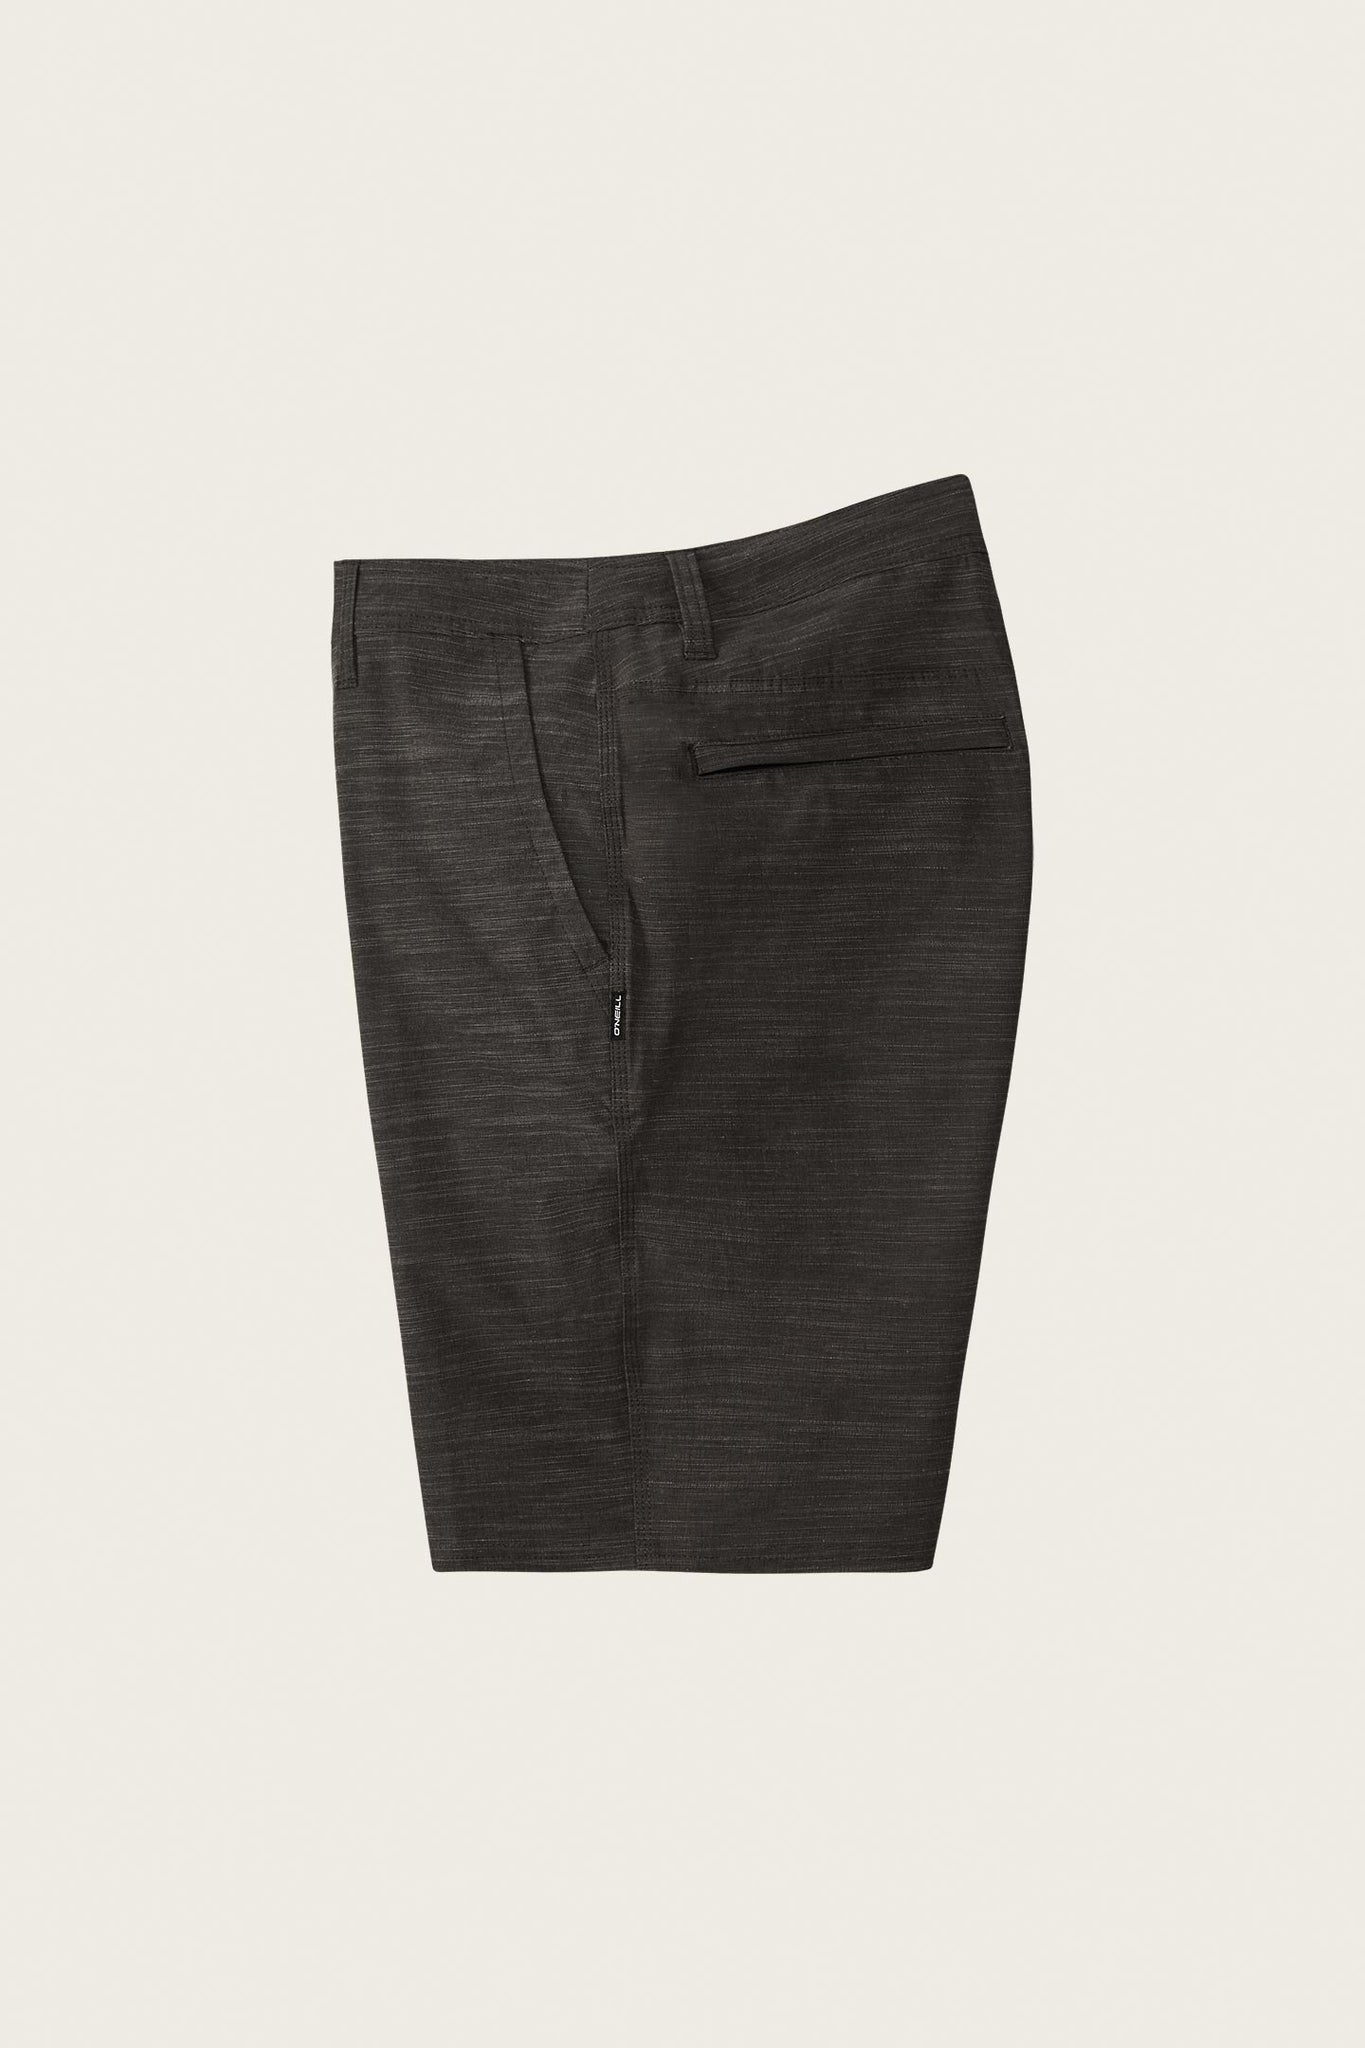 Locked Slub Hybrid Shorts - Graphite | O'Neill